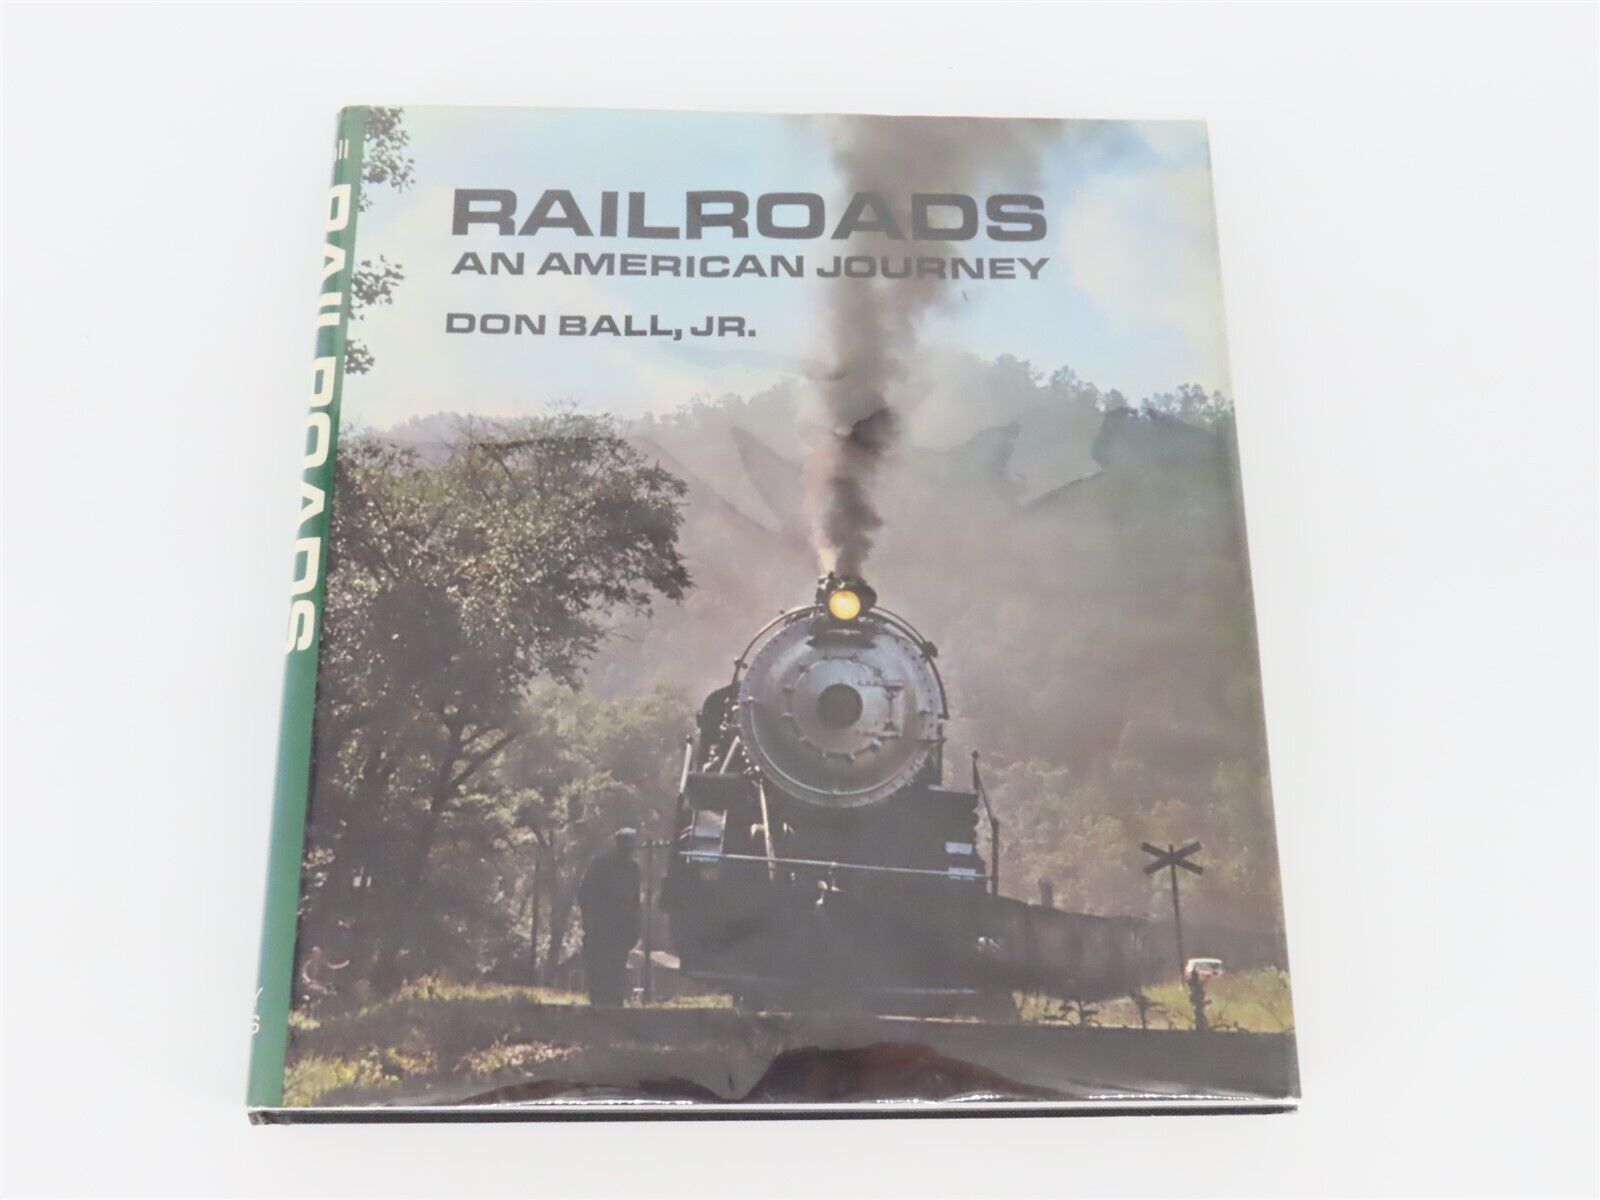 Railroads - An American Journey by Don Ball, Jr. ©1975 HC Book